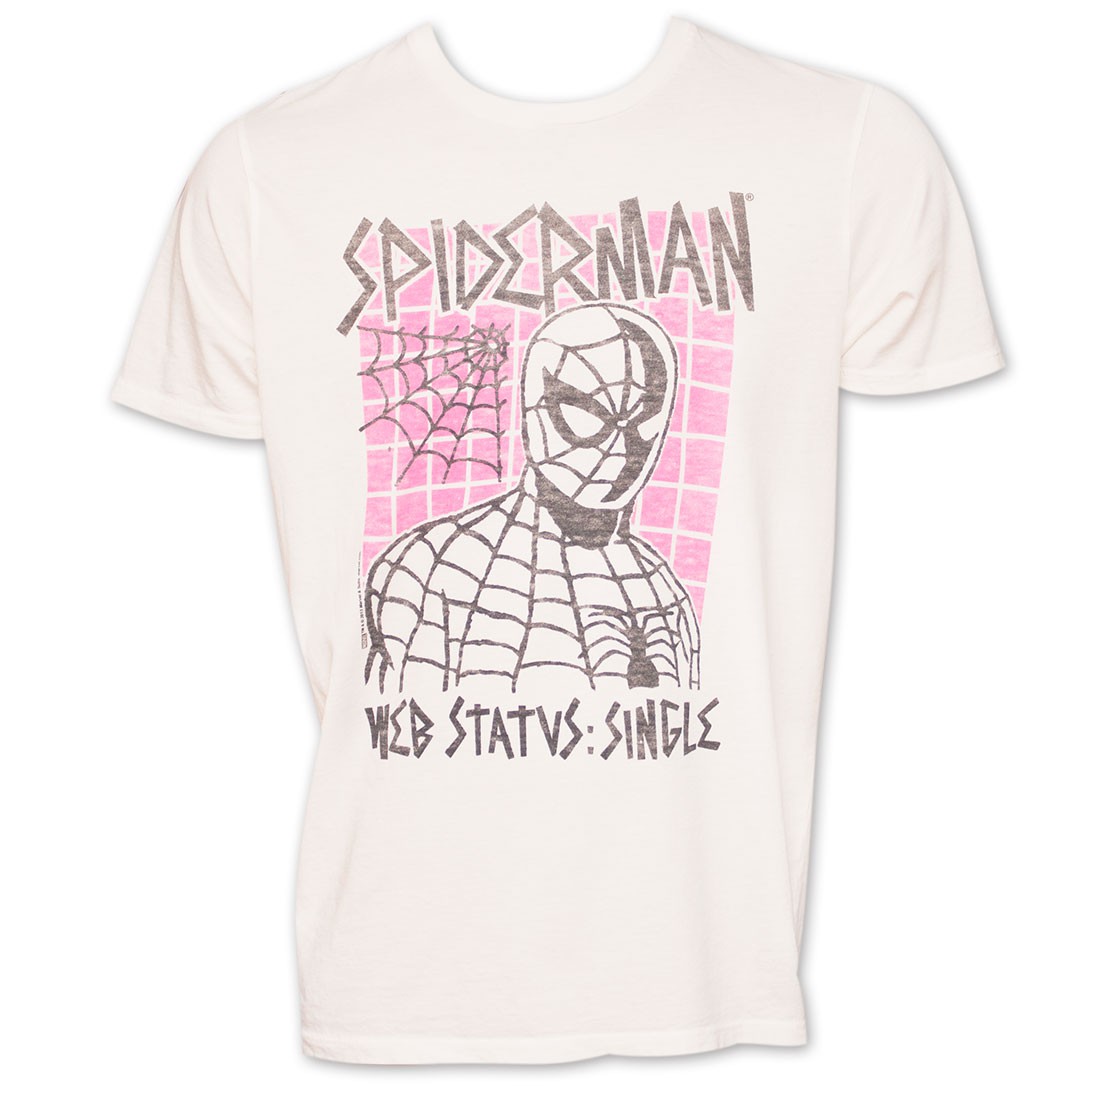 Spider-Man Junk Food Brand "Web Status Single" T-Shirt